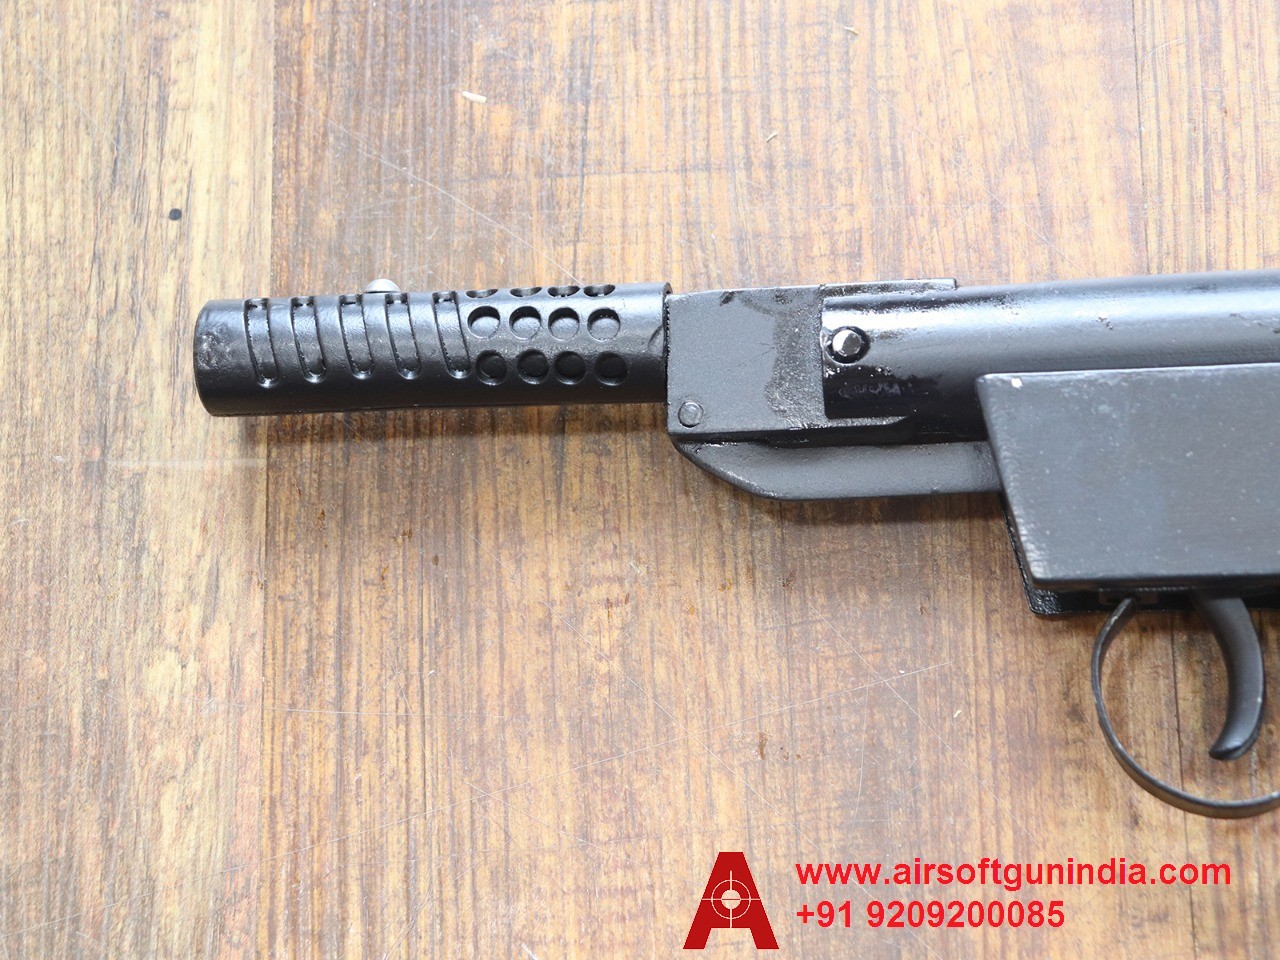 Bond Target Metal Single-Shot .177 Caliber / 4.5 Mm Indian Air Pistol By Airsoft Gun India